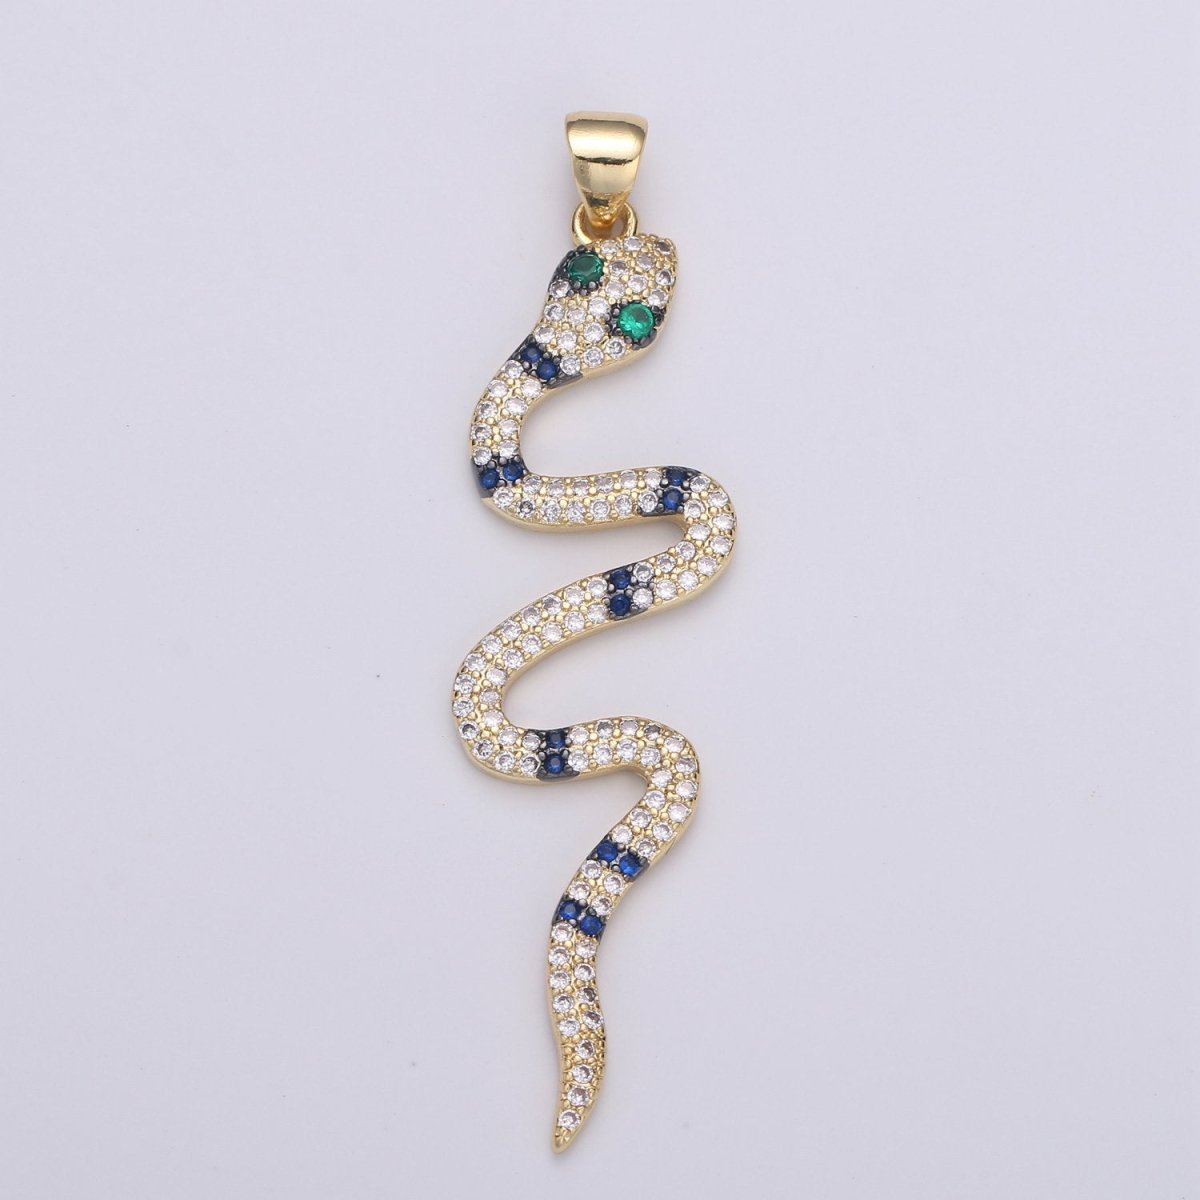 Green CZ 14k Gold Filled Snake Charm, Micro Pave Snake Pendant Charm, Gold Filled Charm, For Serpent Animal Jewelry Dangle Charm I-906 I-905 I-907 - DLUXCA